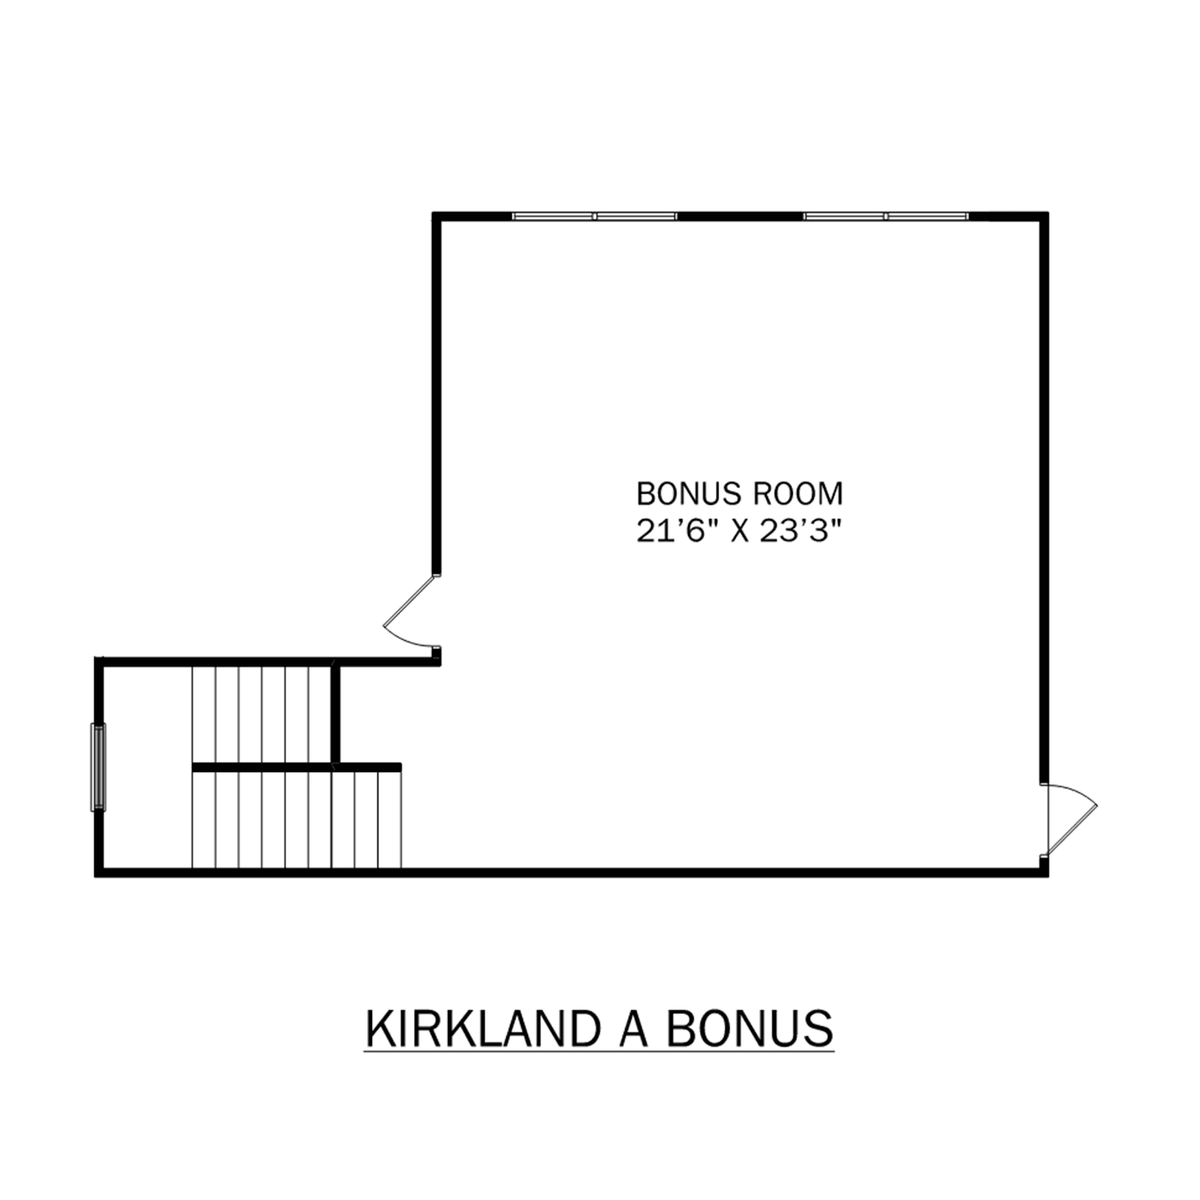 2 - The Kirkland with Bonus buildable floor plan layout in Davidson Homes' Barnett's Crossing community.